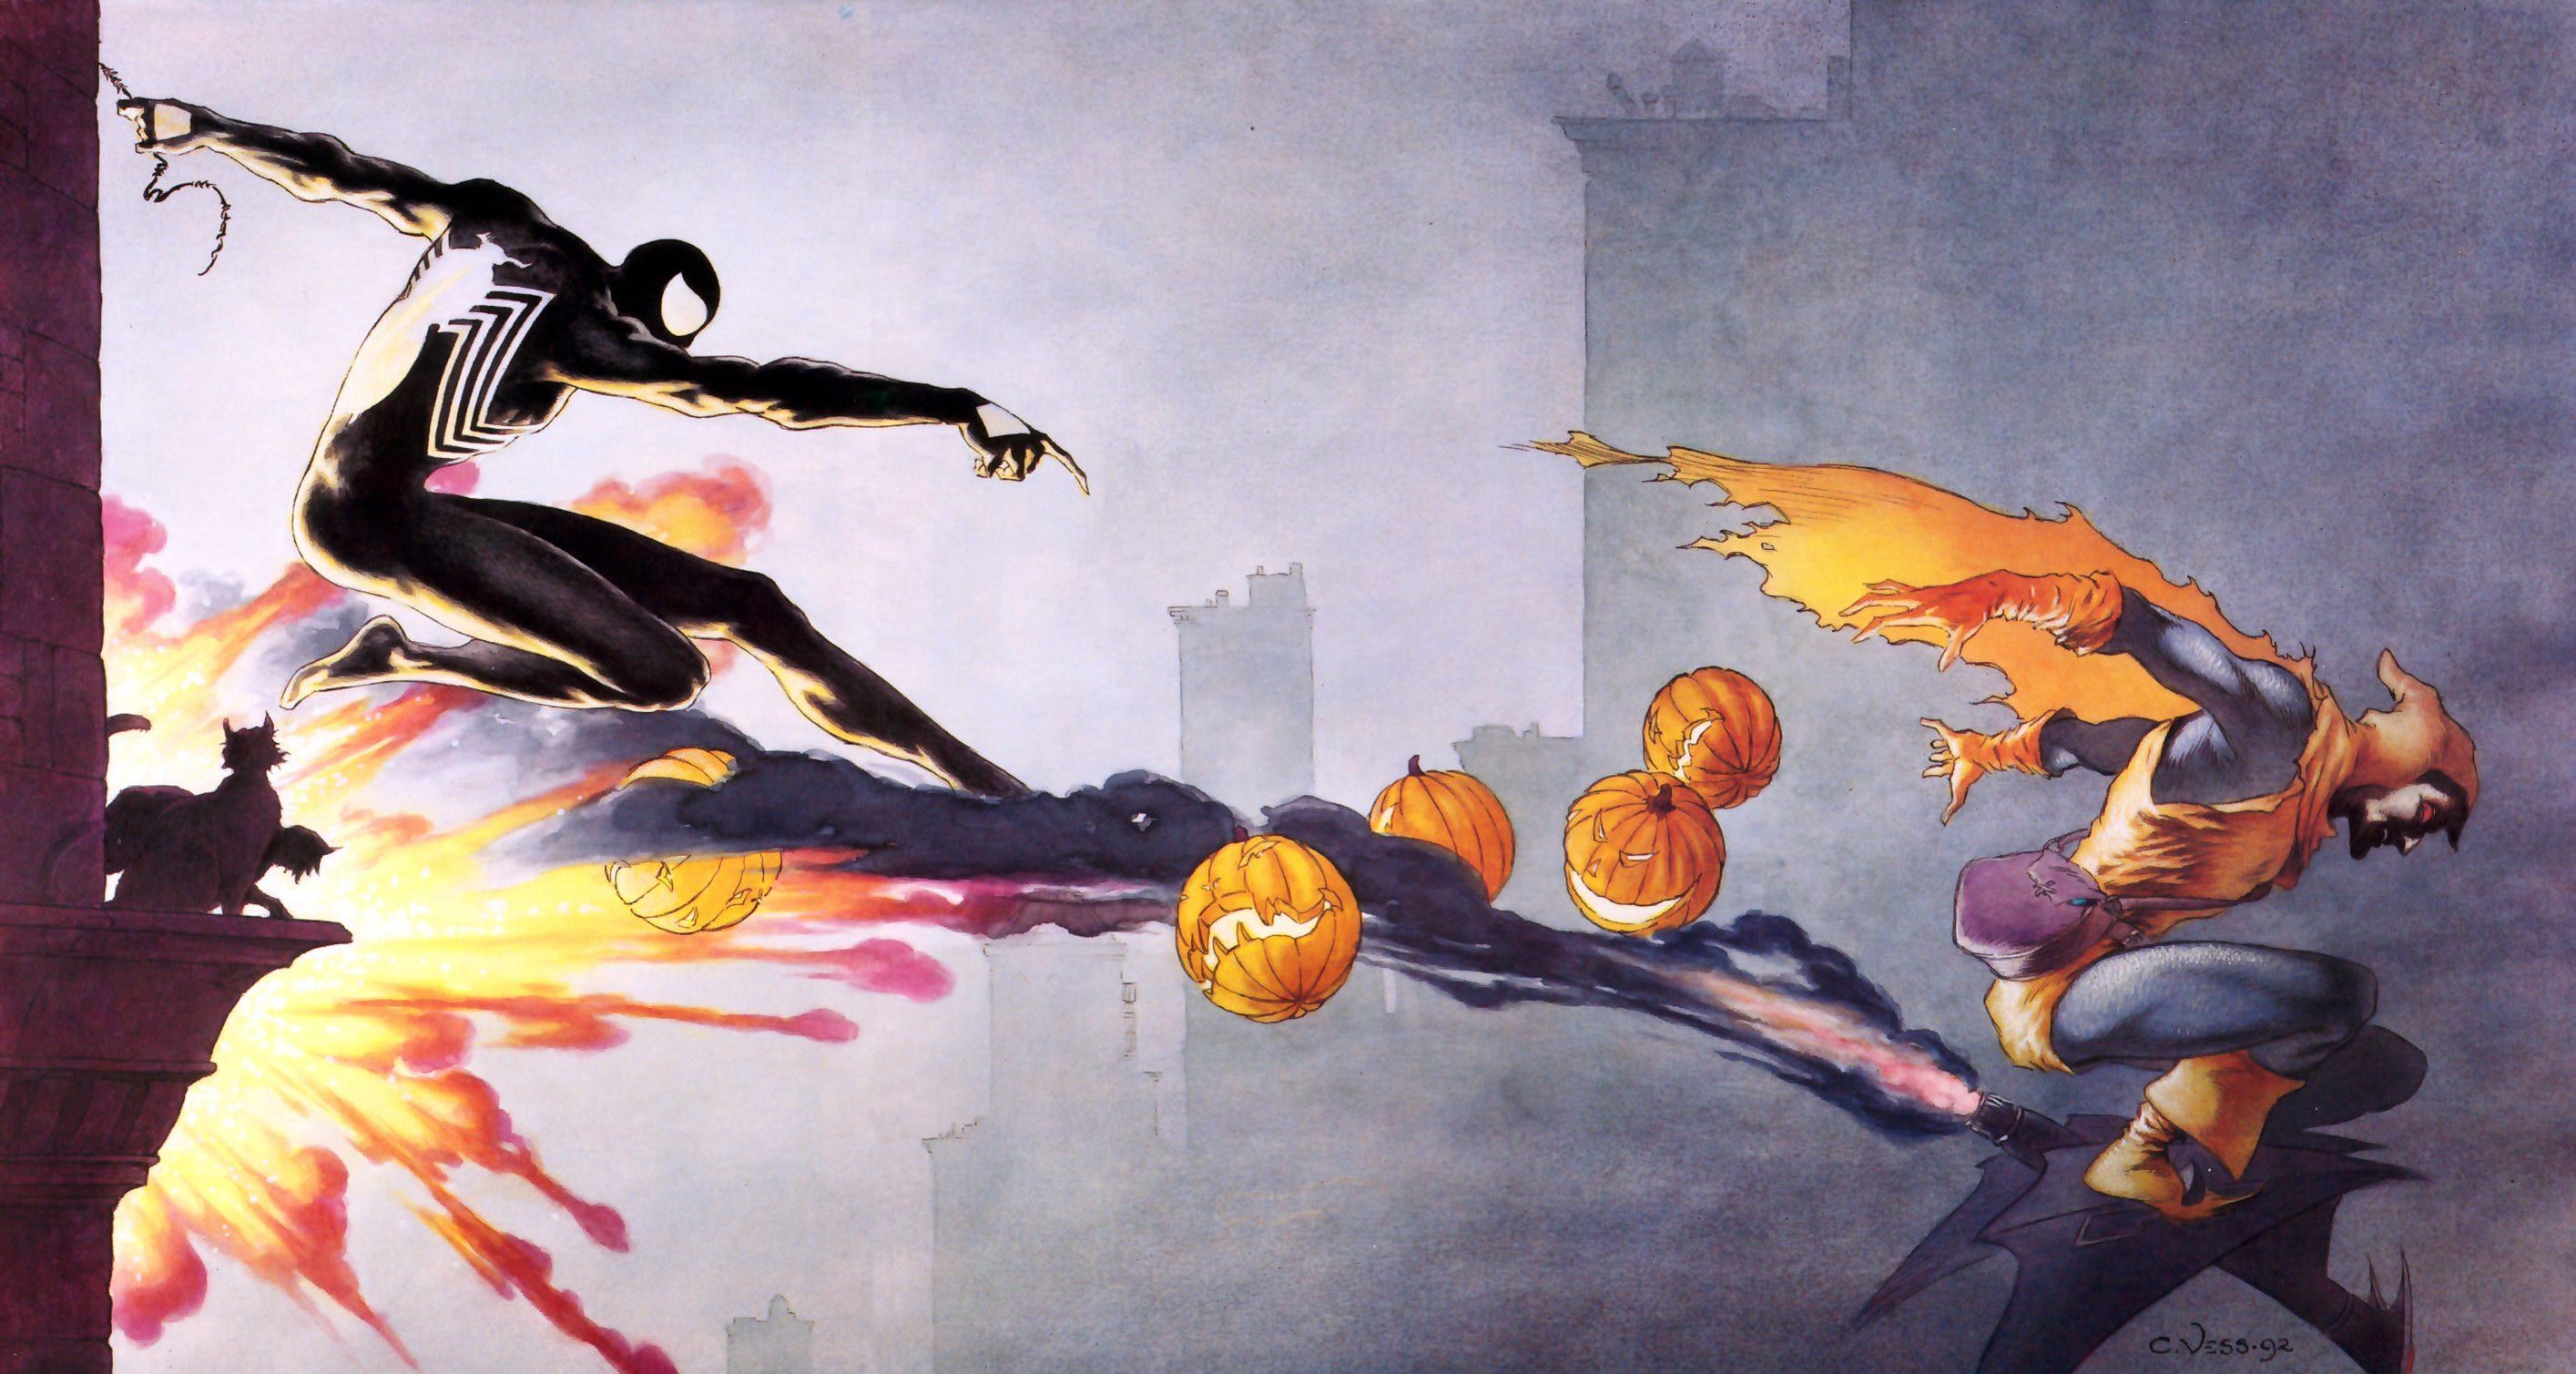 Spider-Man desktop wallpaper by Charles Vess.